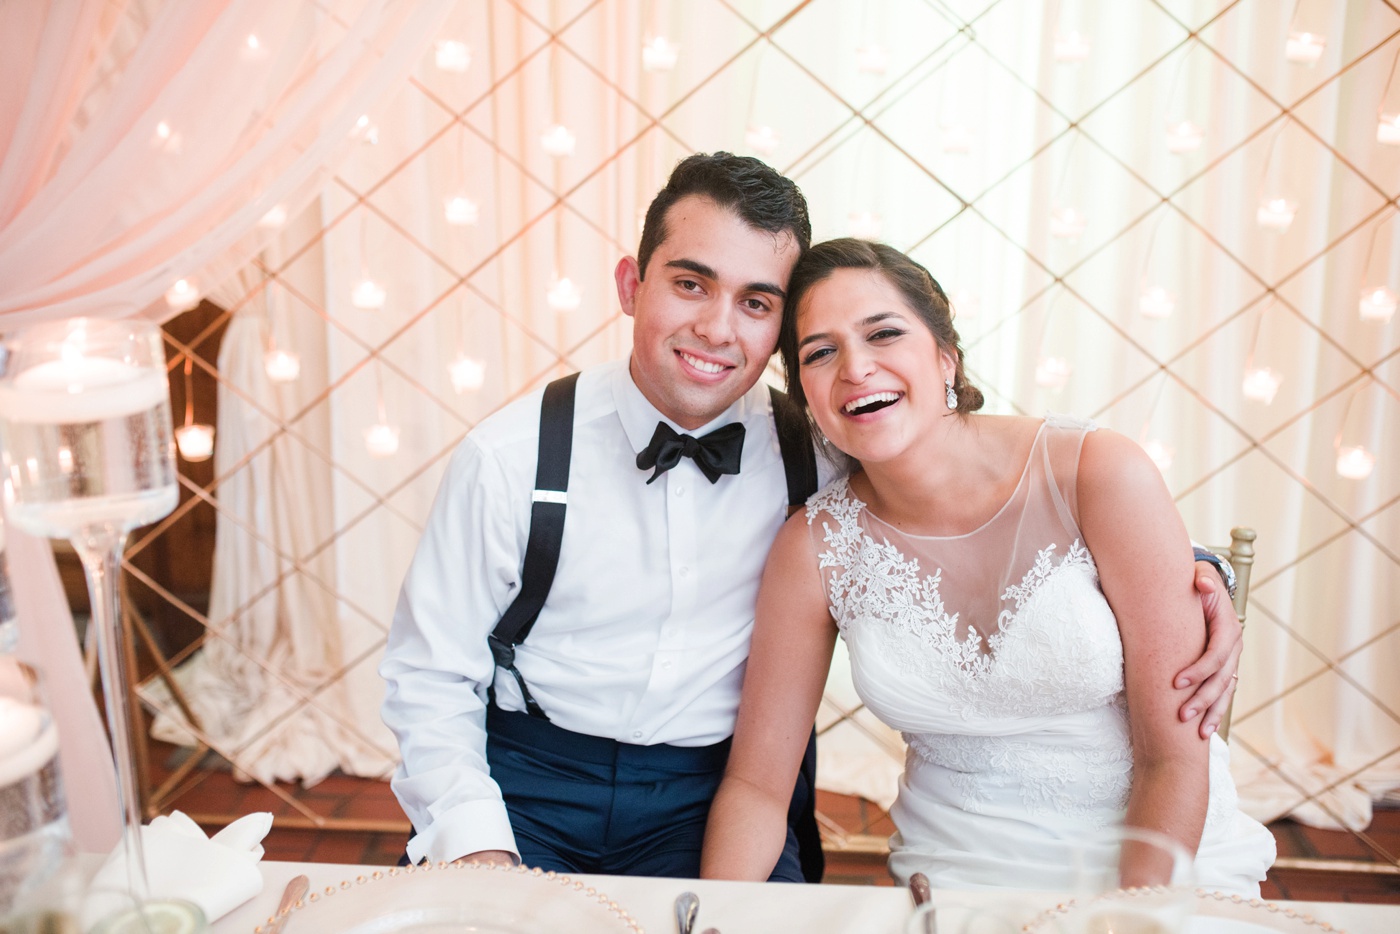 113 - Daniela + Franco - Celebrate at Snug Harbor Wedding - Staten Island New York Wedding Photographer - Alison Dunn Photography photo